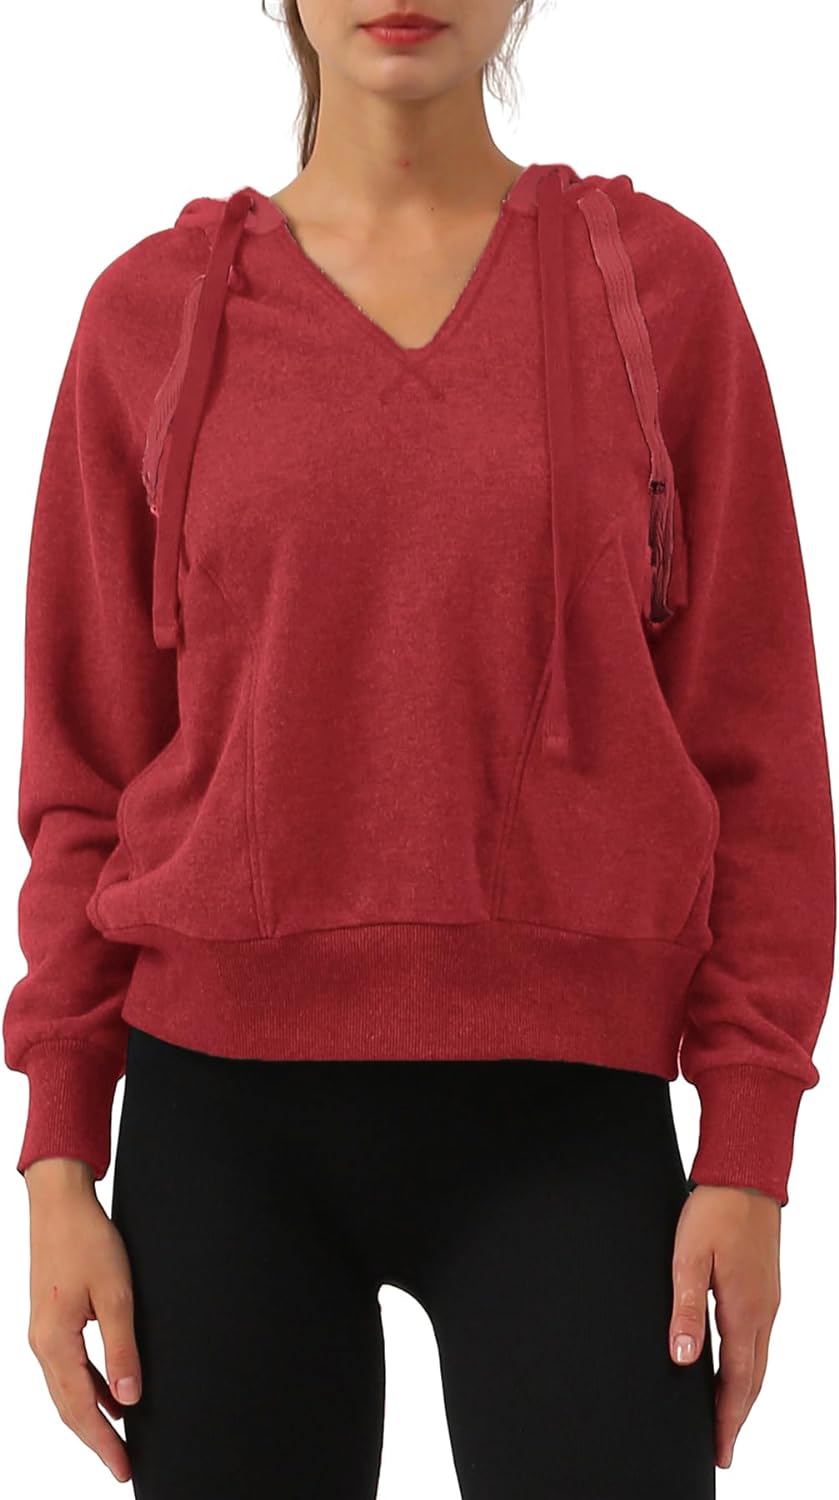 NTG Fad Red / XX-Large Long Sleeve Hoodie with Pockets Hooded Sweatshirt